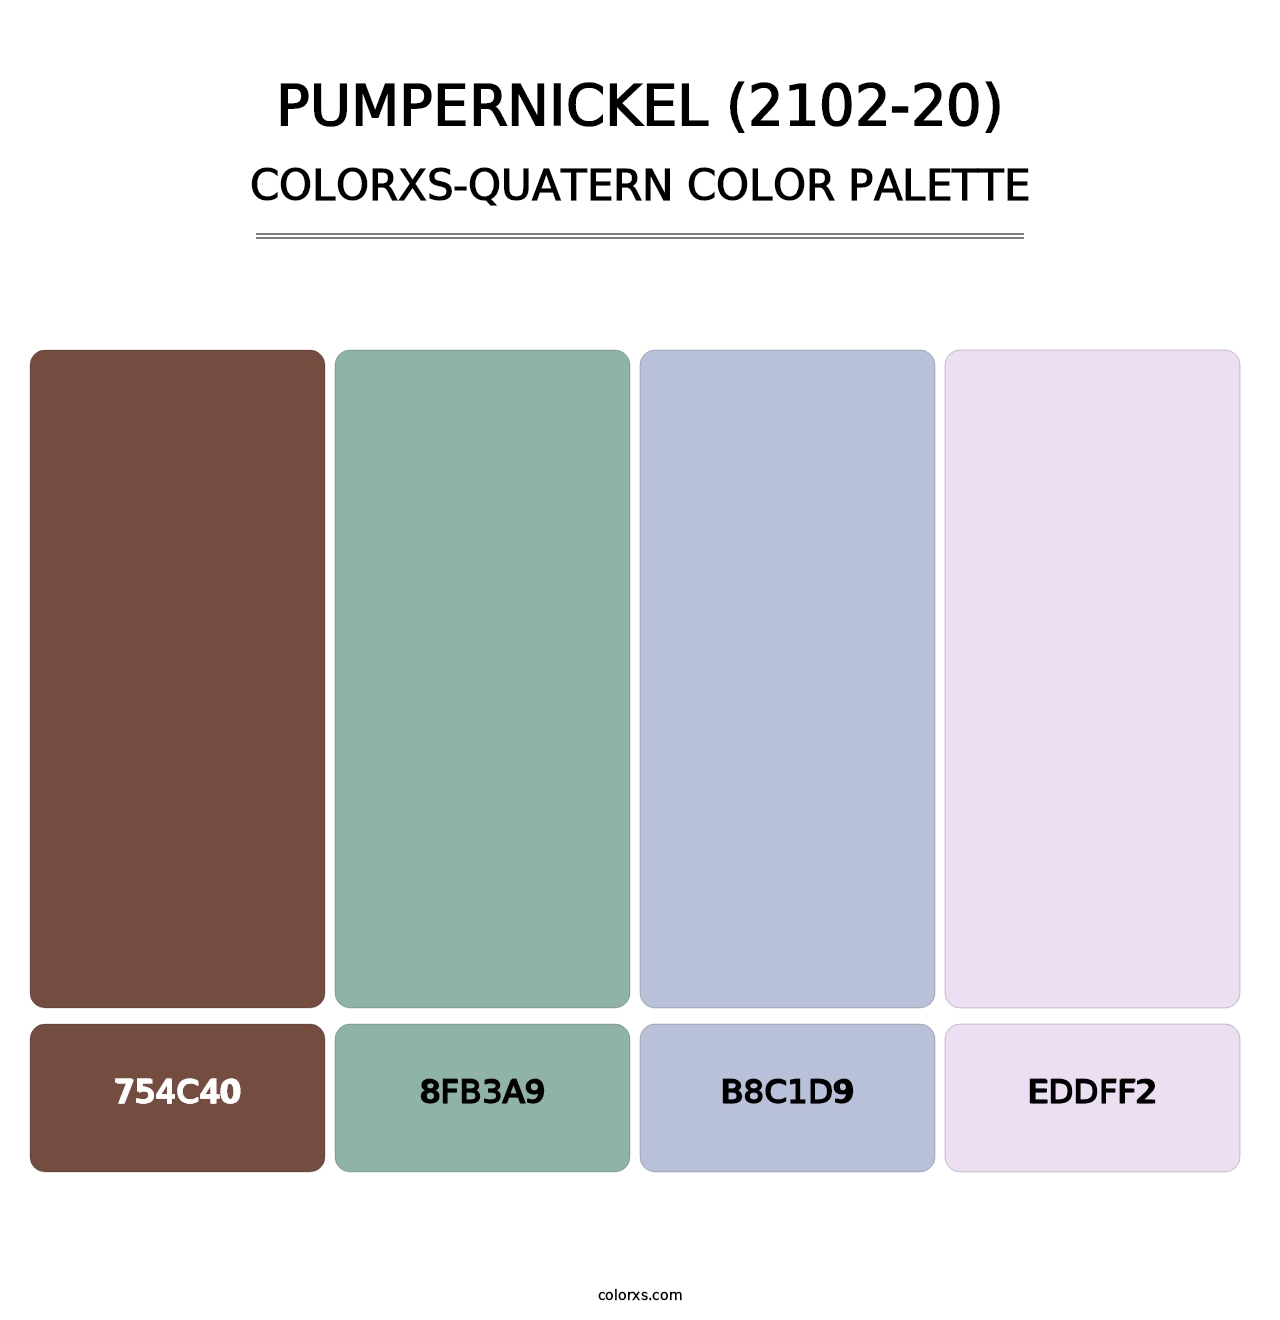 Pumpernickel (2102-20) - Colorxs Quatern Palette